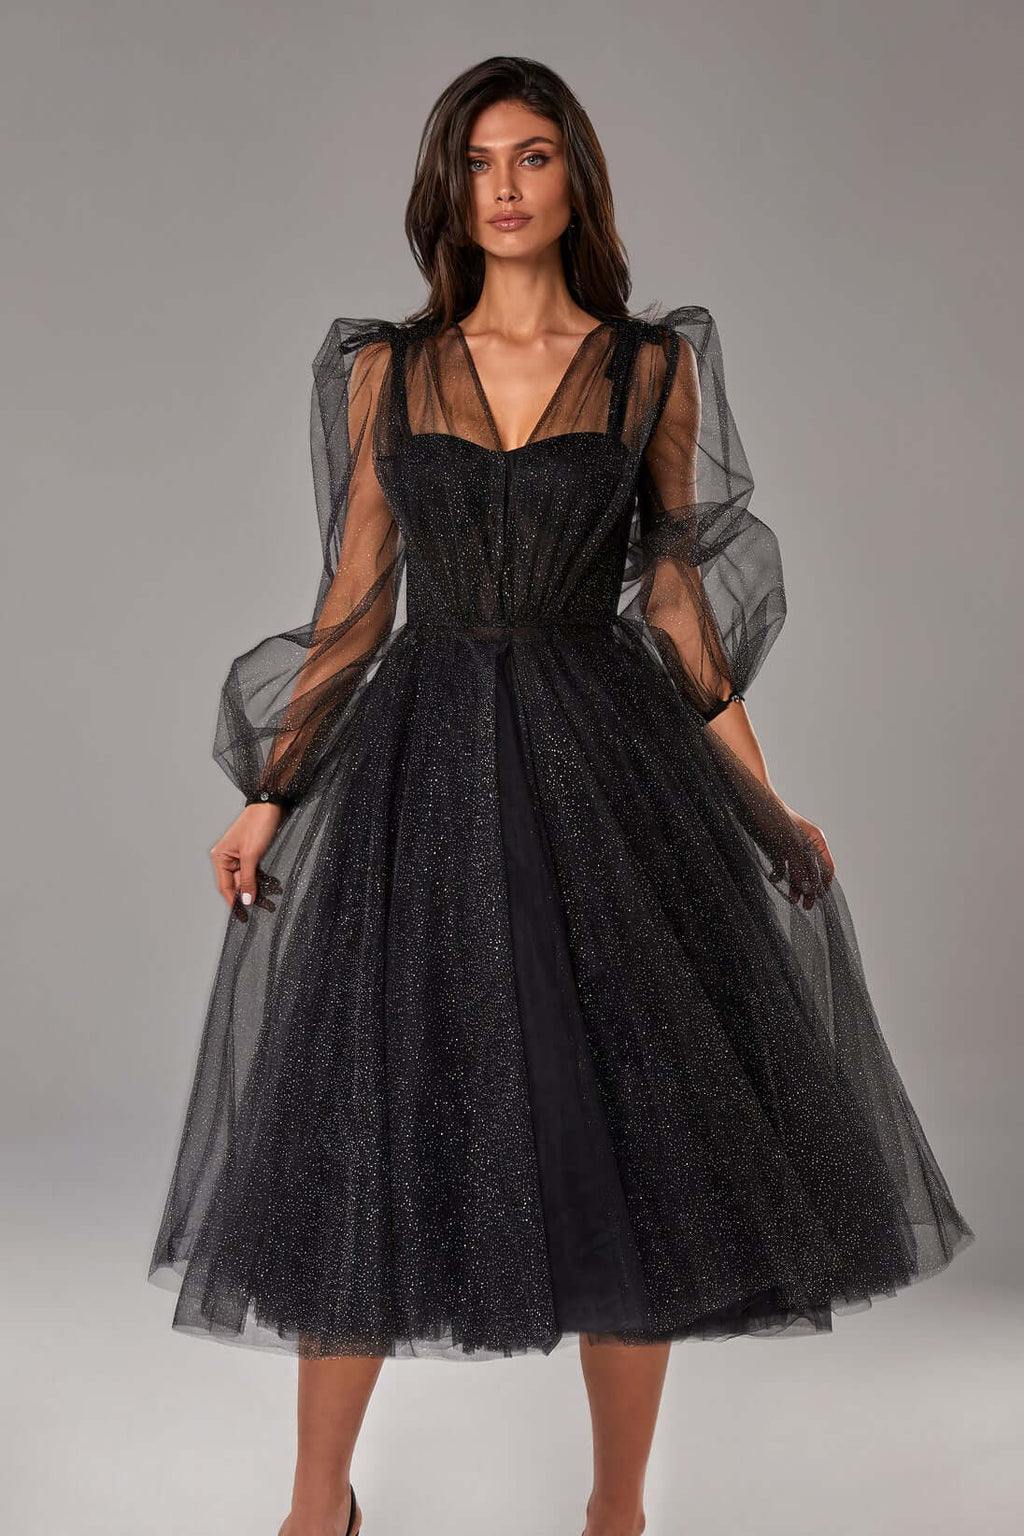 black dress elegant